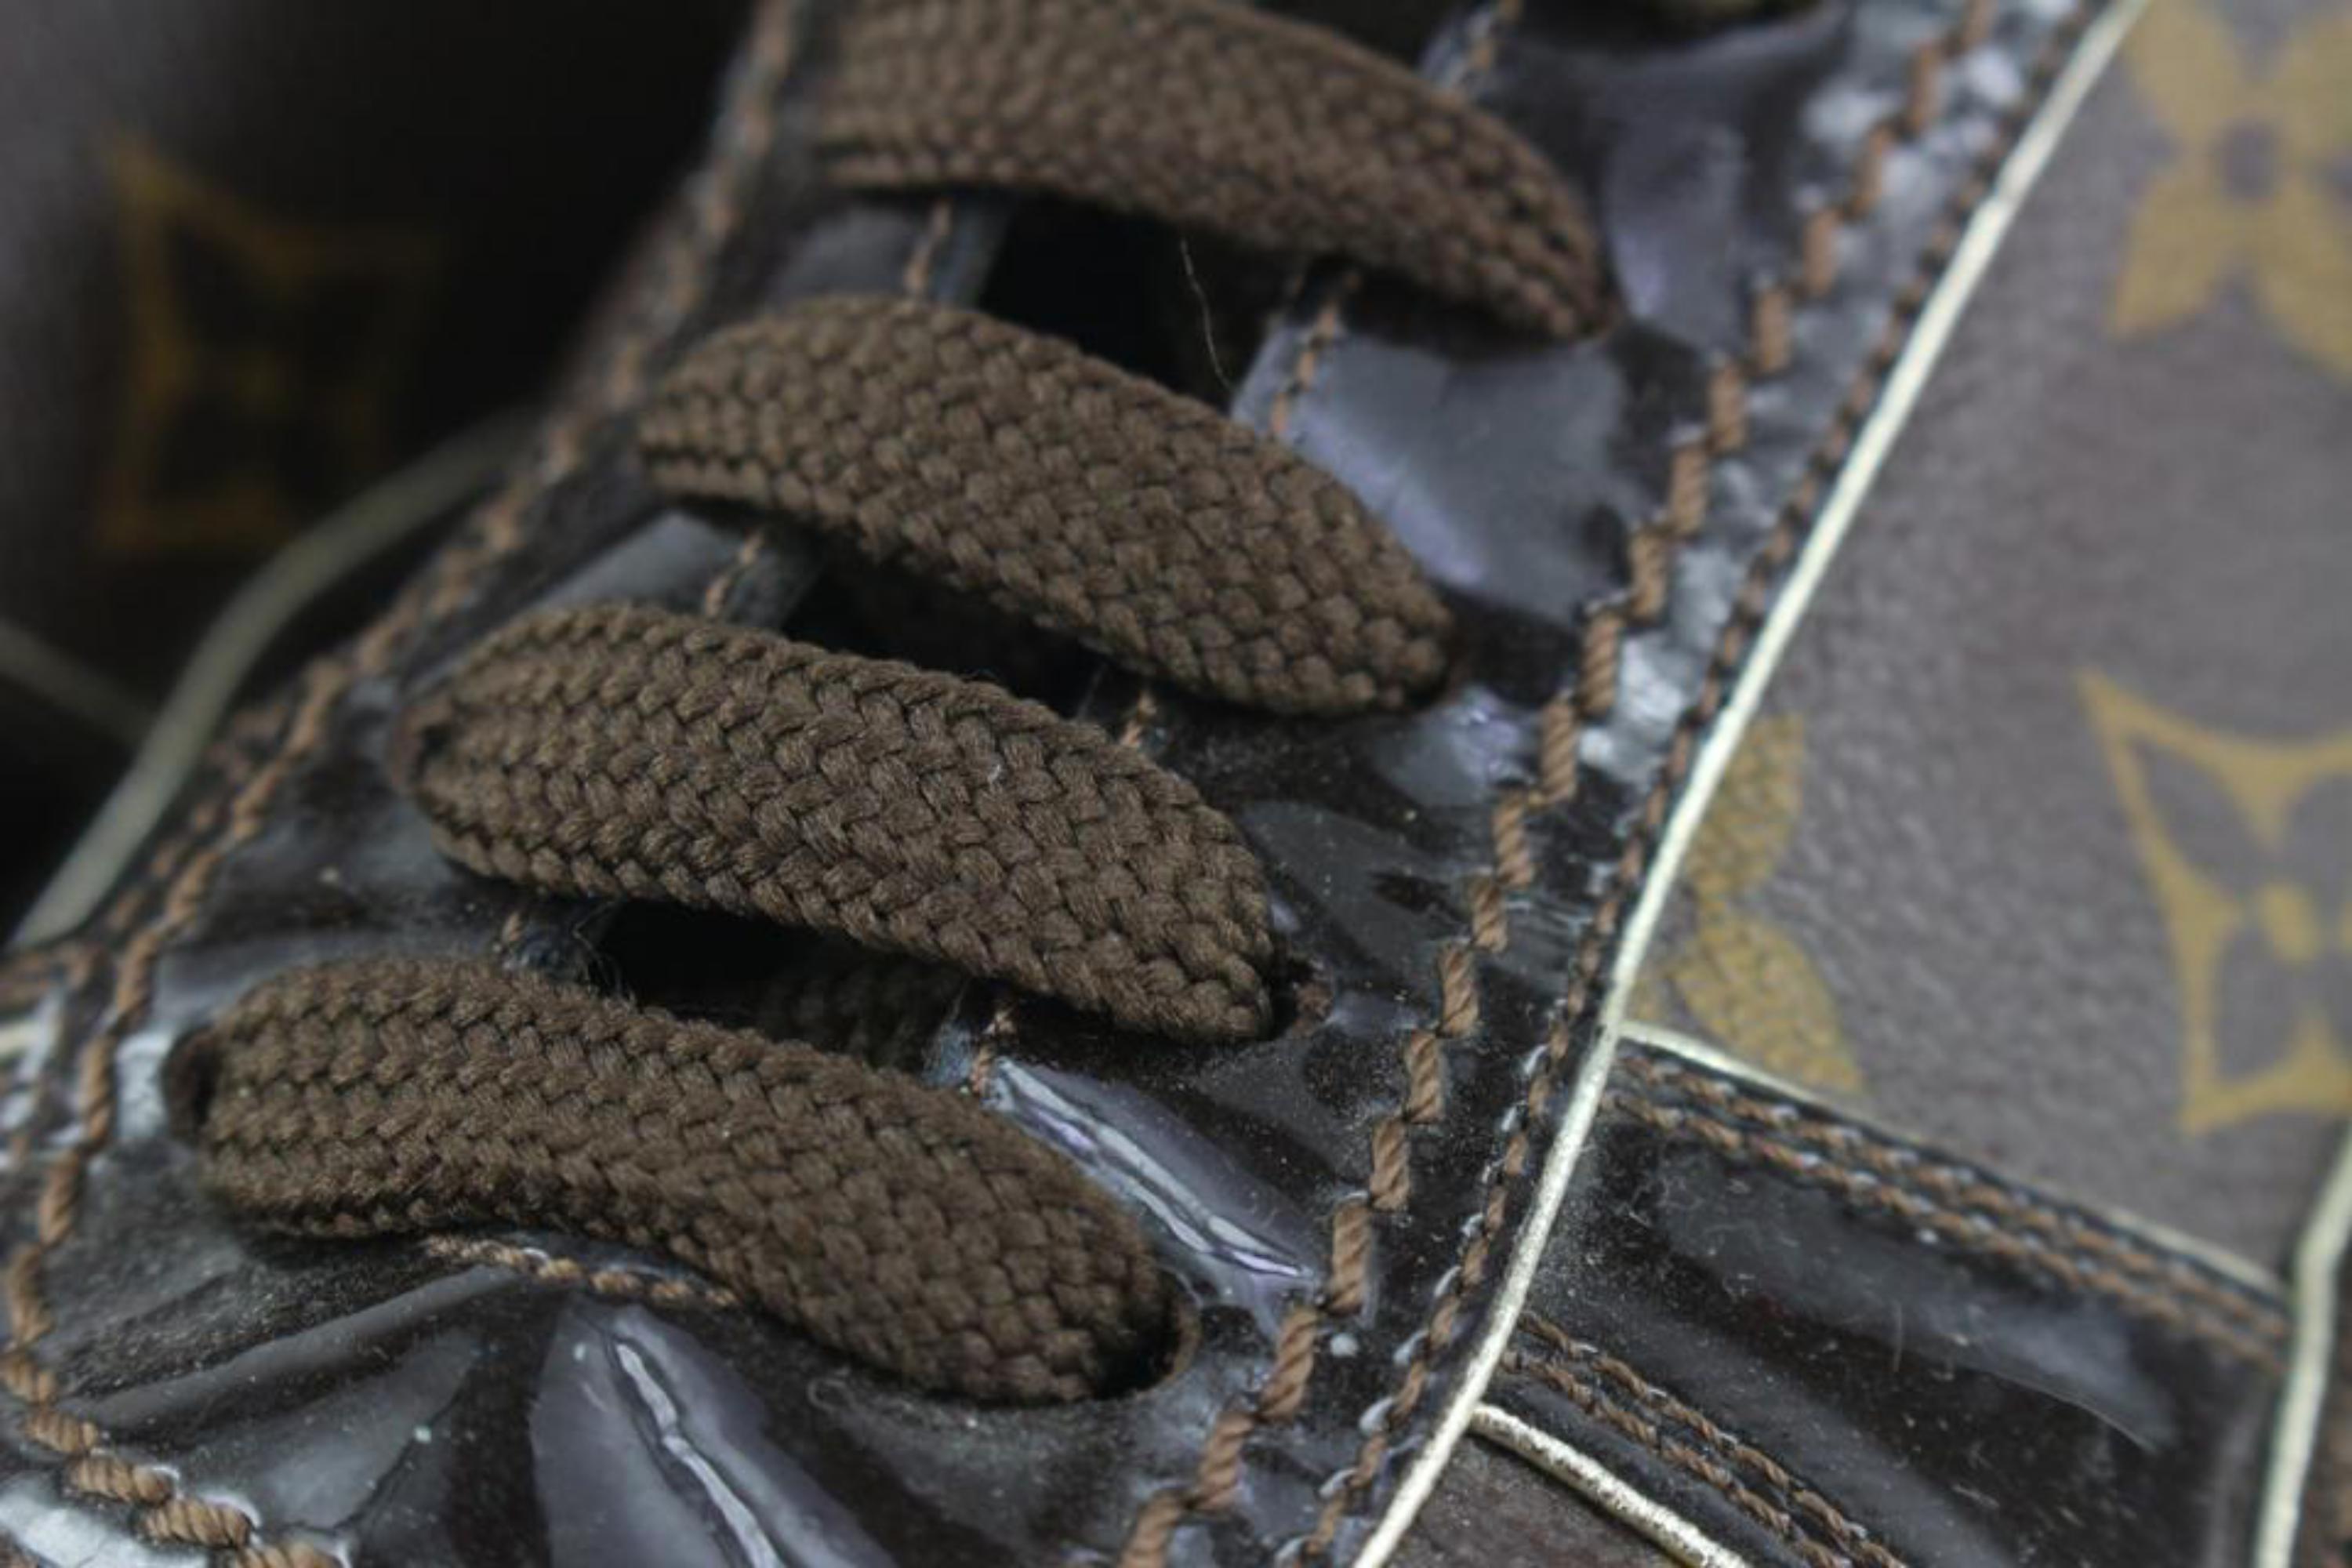 LOUIS VUITTON Stellar Monogram Leather Sneakers Womens Size 41 EU